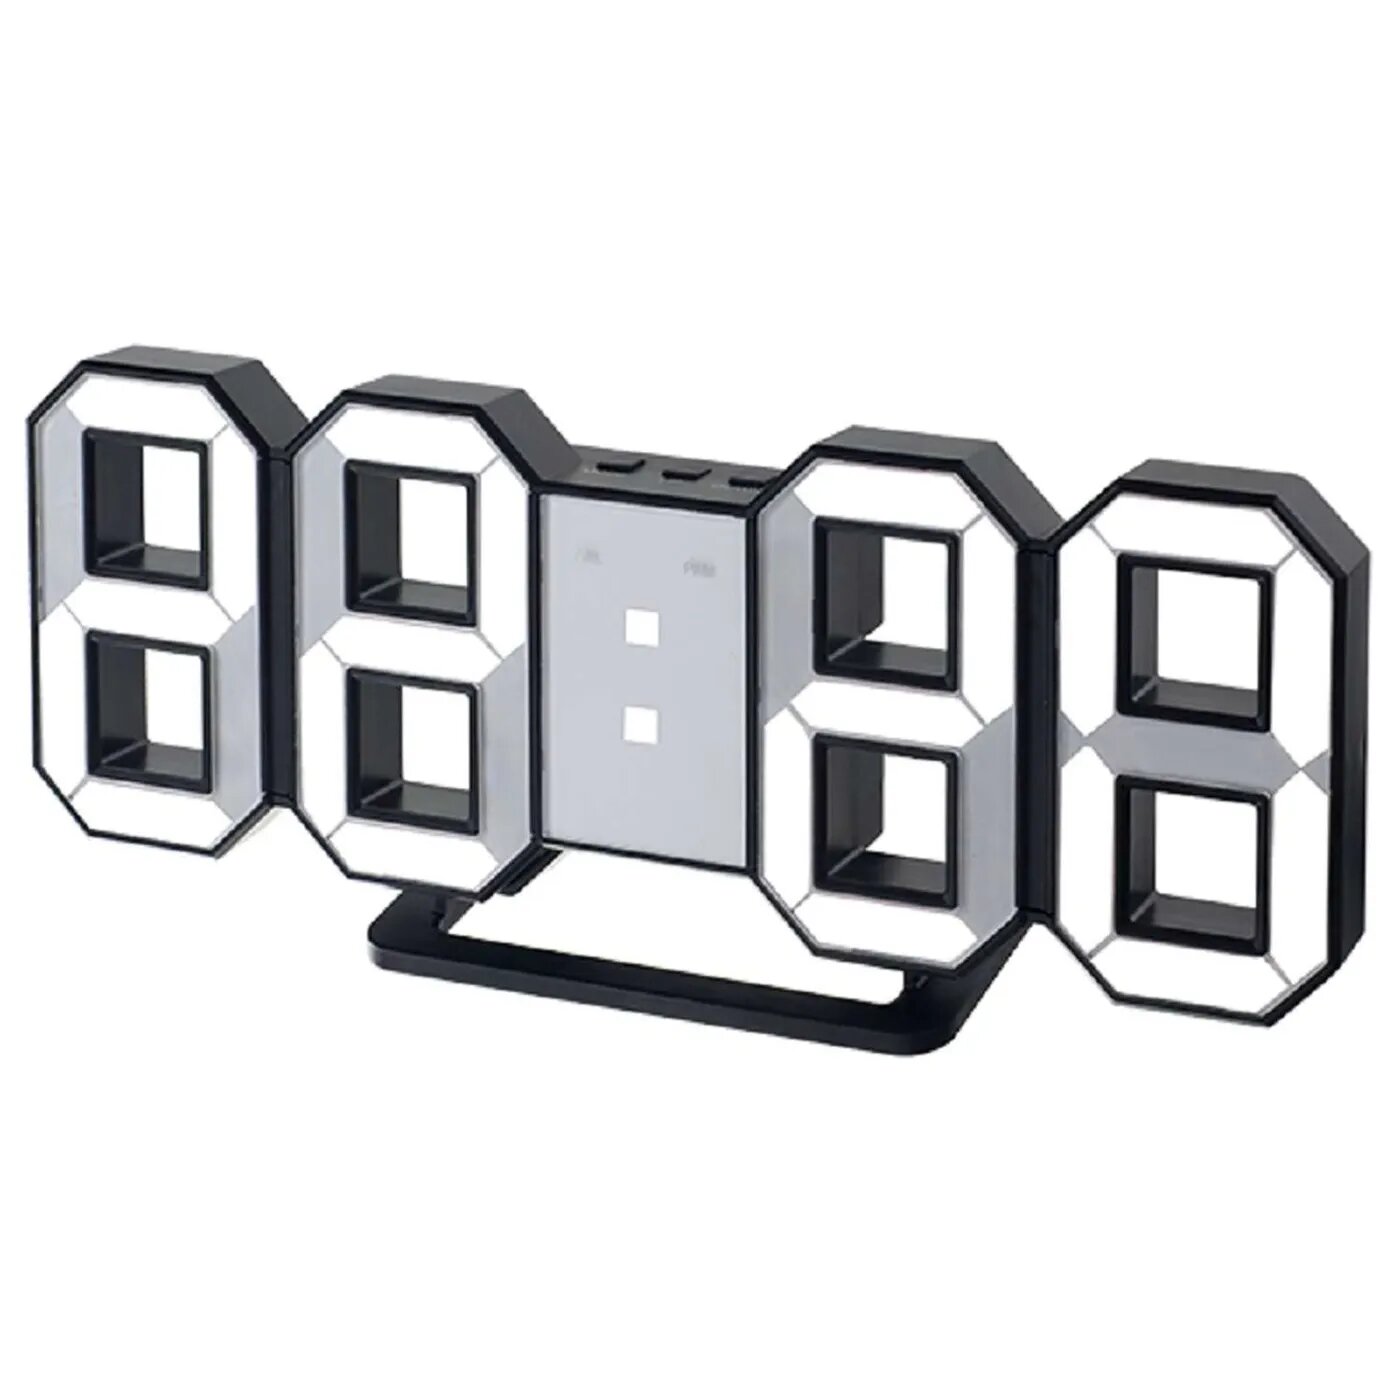 LED часы-будильник Perfeo LUMINOUS черный корпус белая подсветка PF-663